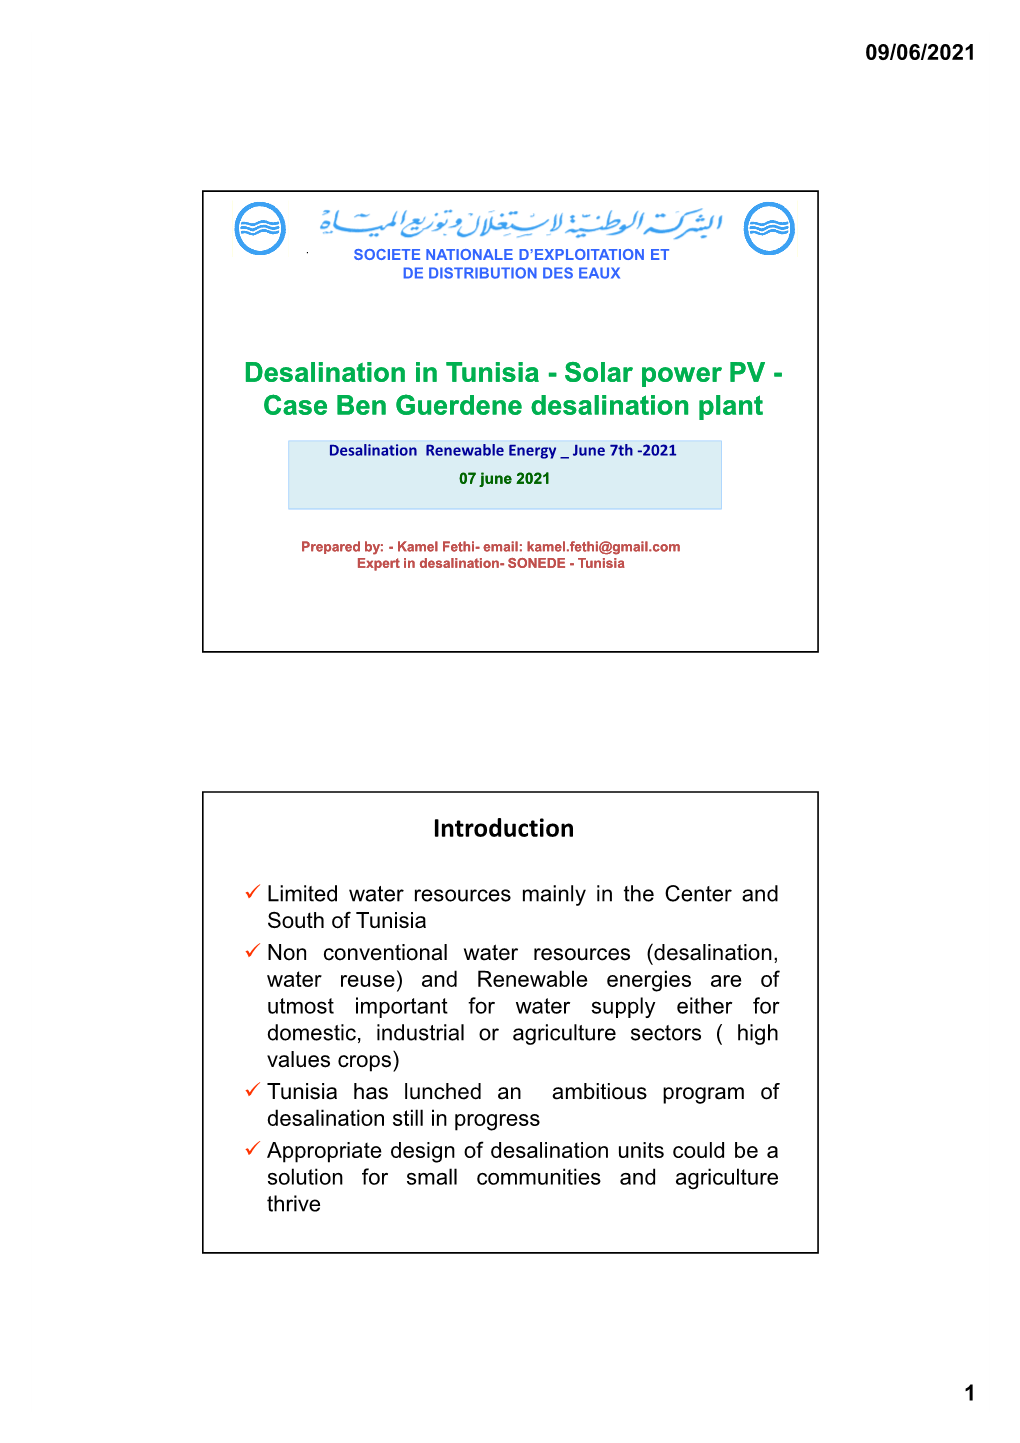 Desalination in Tunisia-Solar Energy Bengardane Plant 5-2021